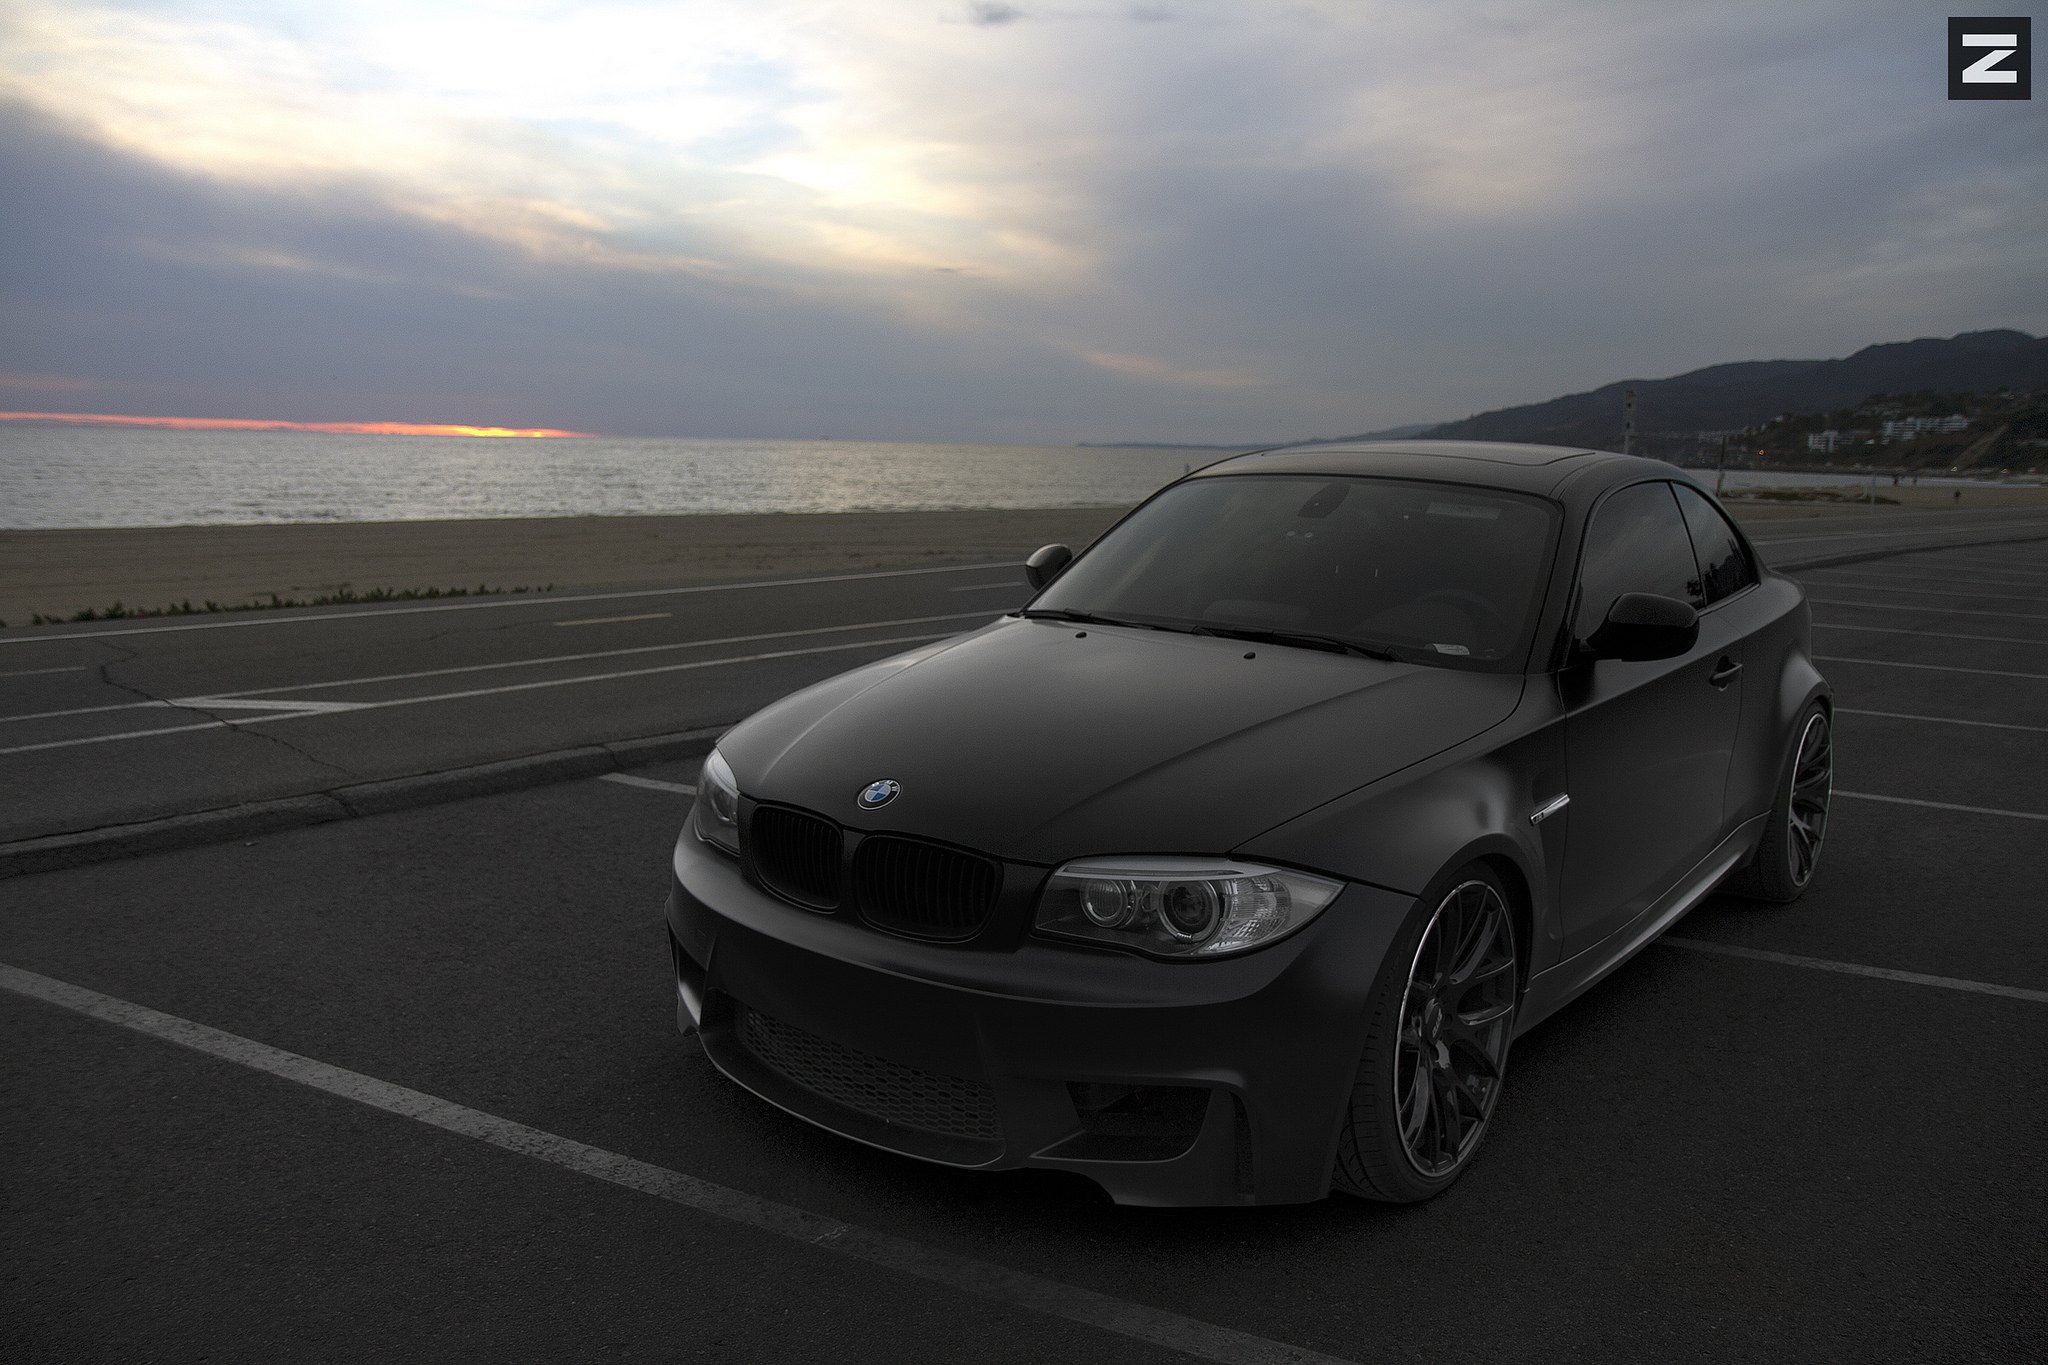 Dark Smoke Halo Headlights on Black BMW 1-Series - Photo by Zito Wheels